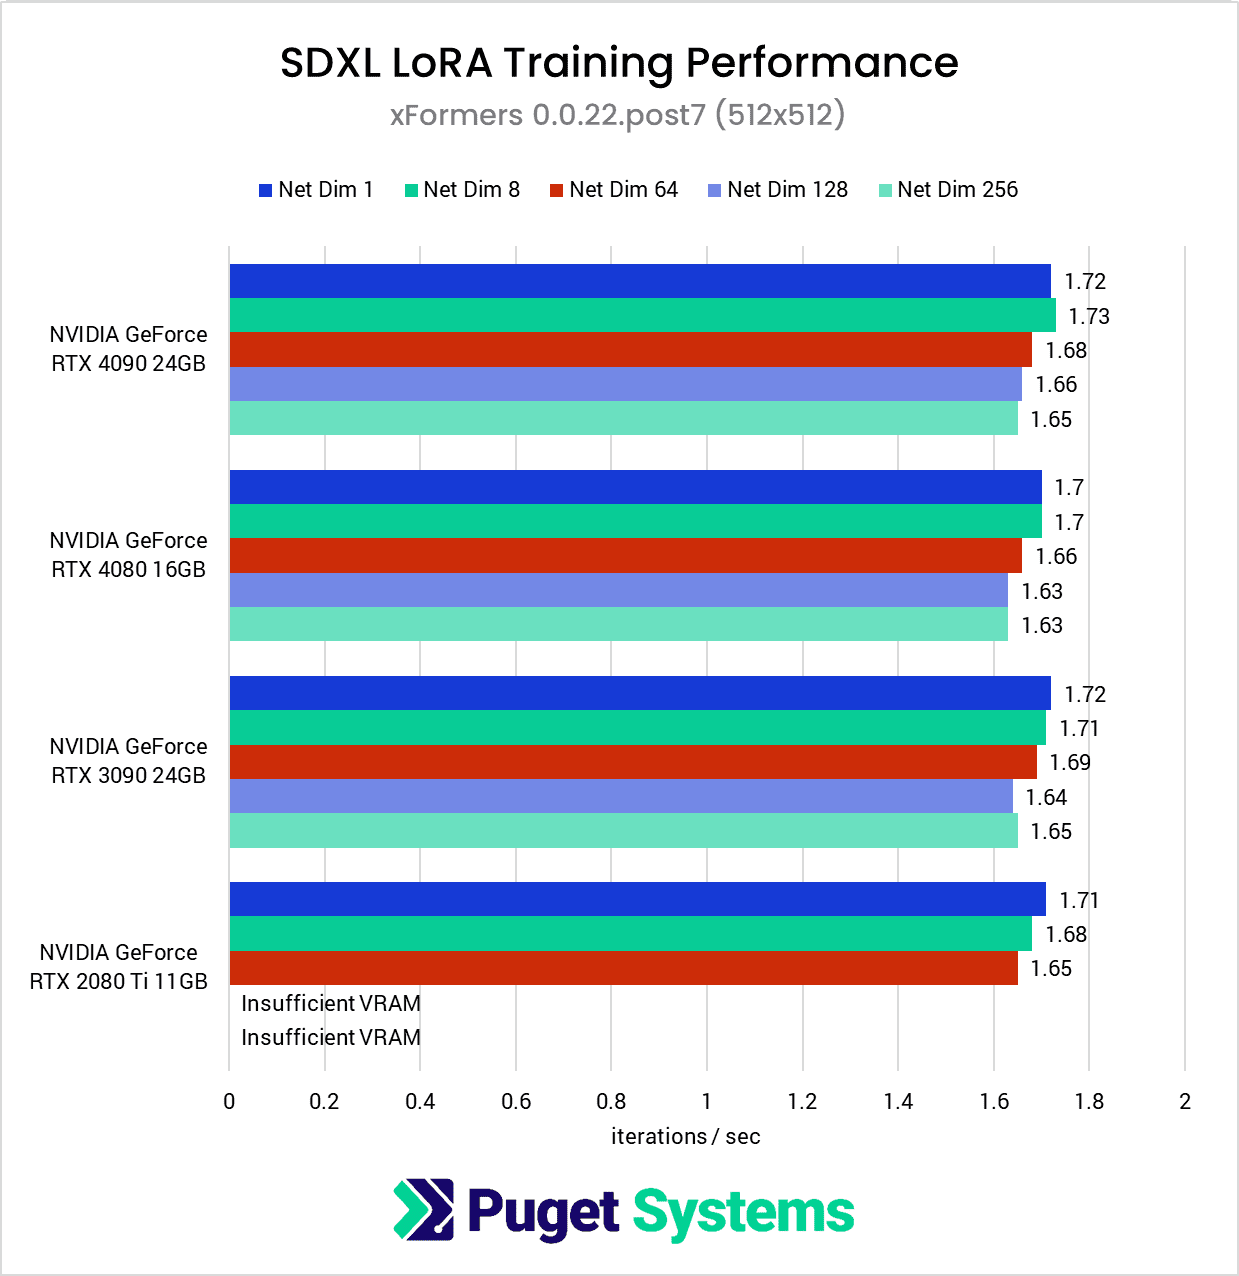 SDXL LoRA Training Performance - xFormers 512